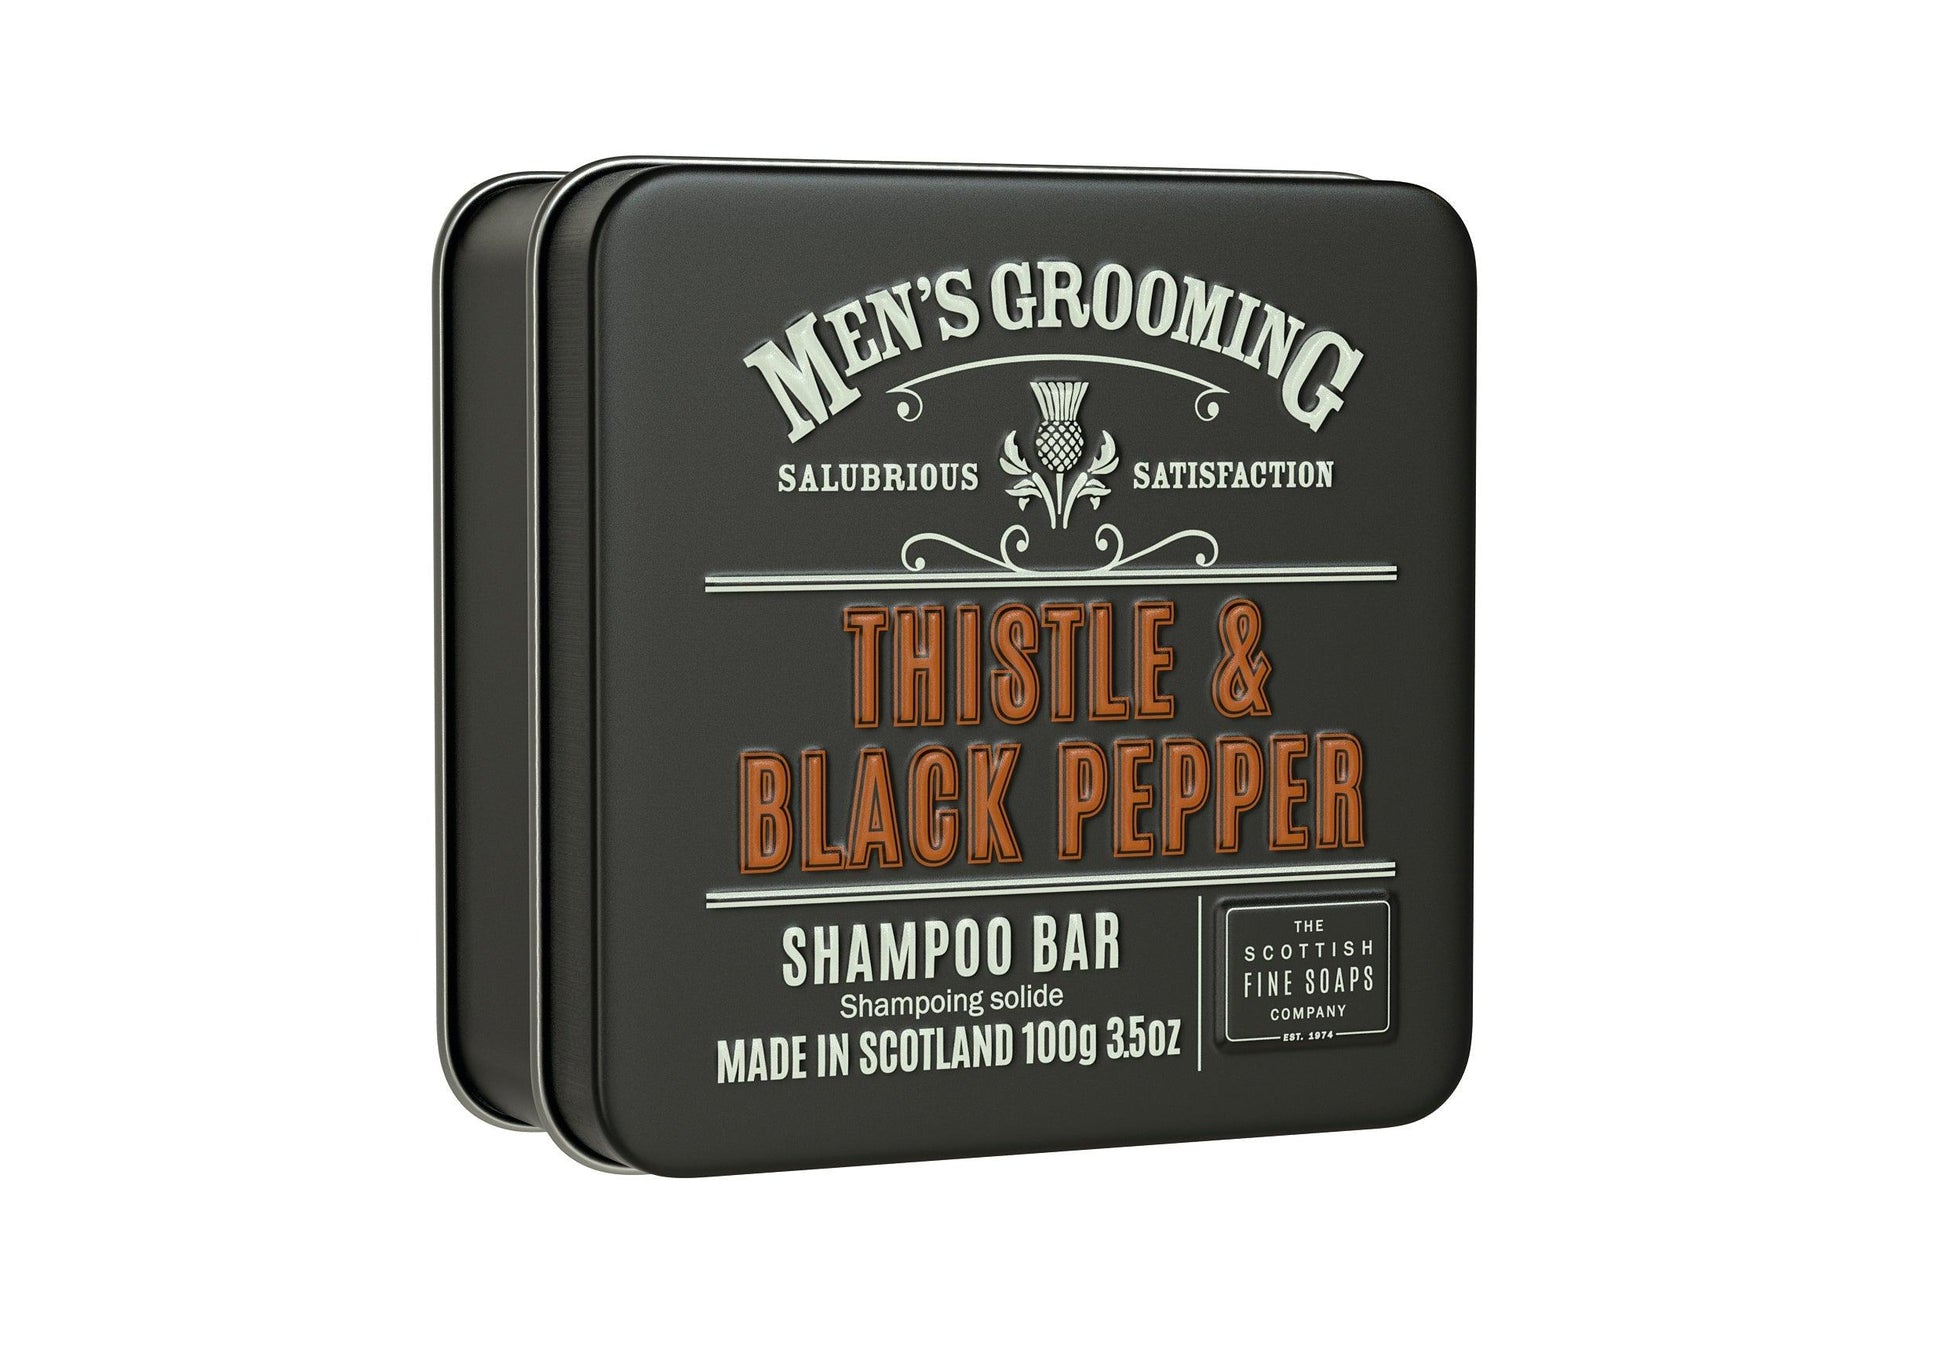 Thistle & Black Pepper Shampoo Bar - RUTHERFORD & Co